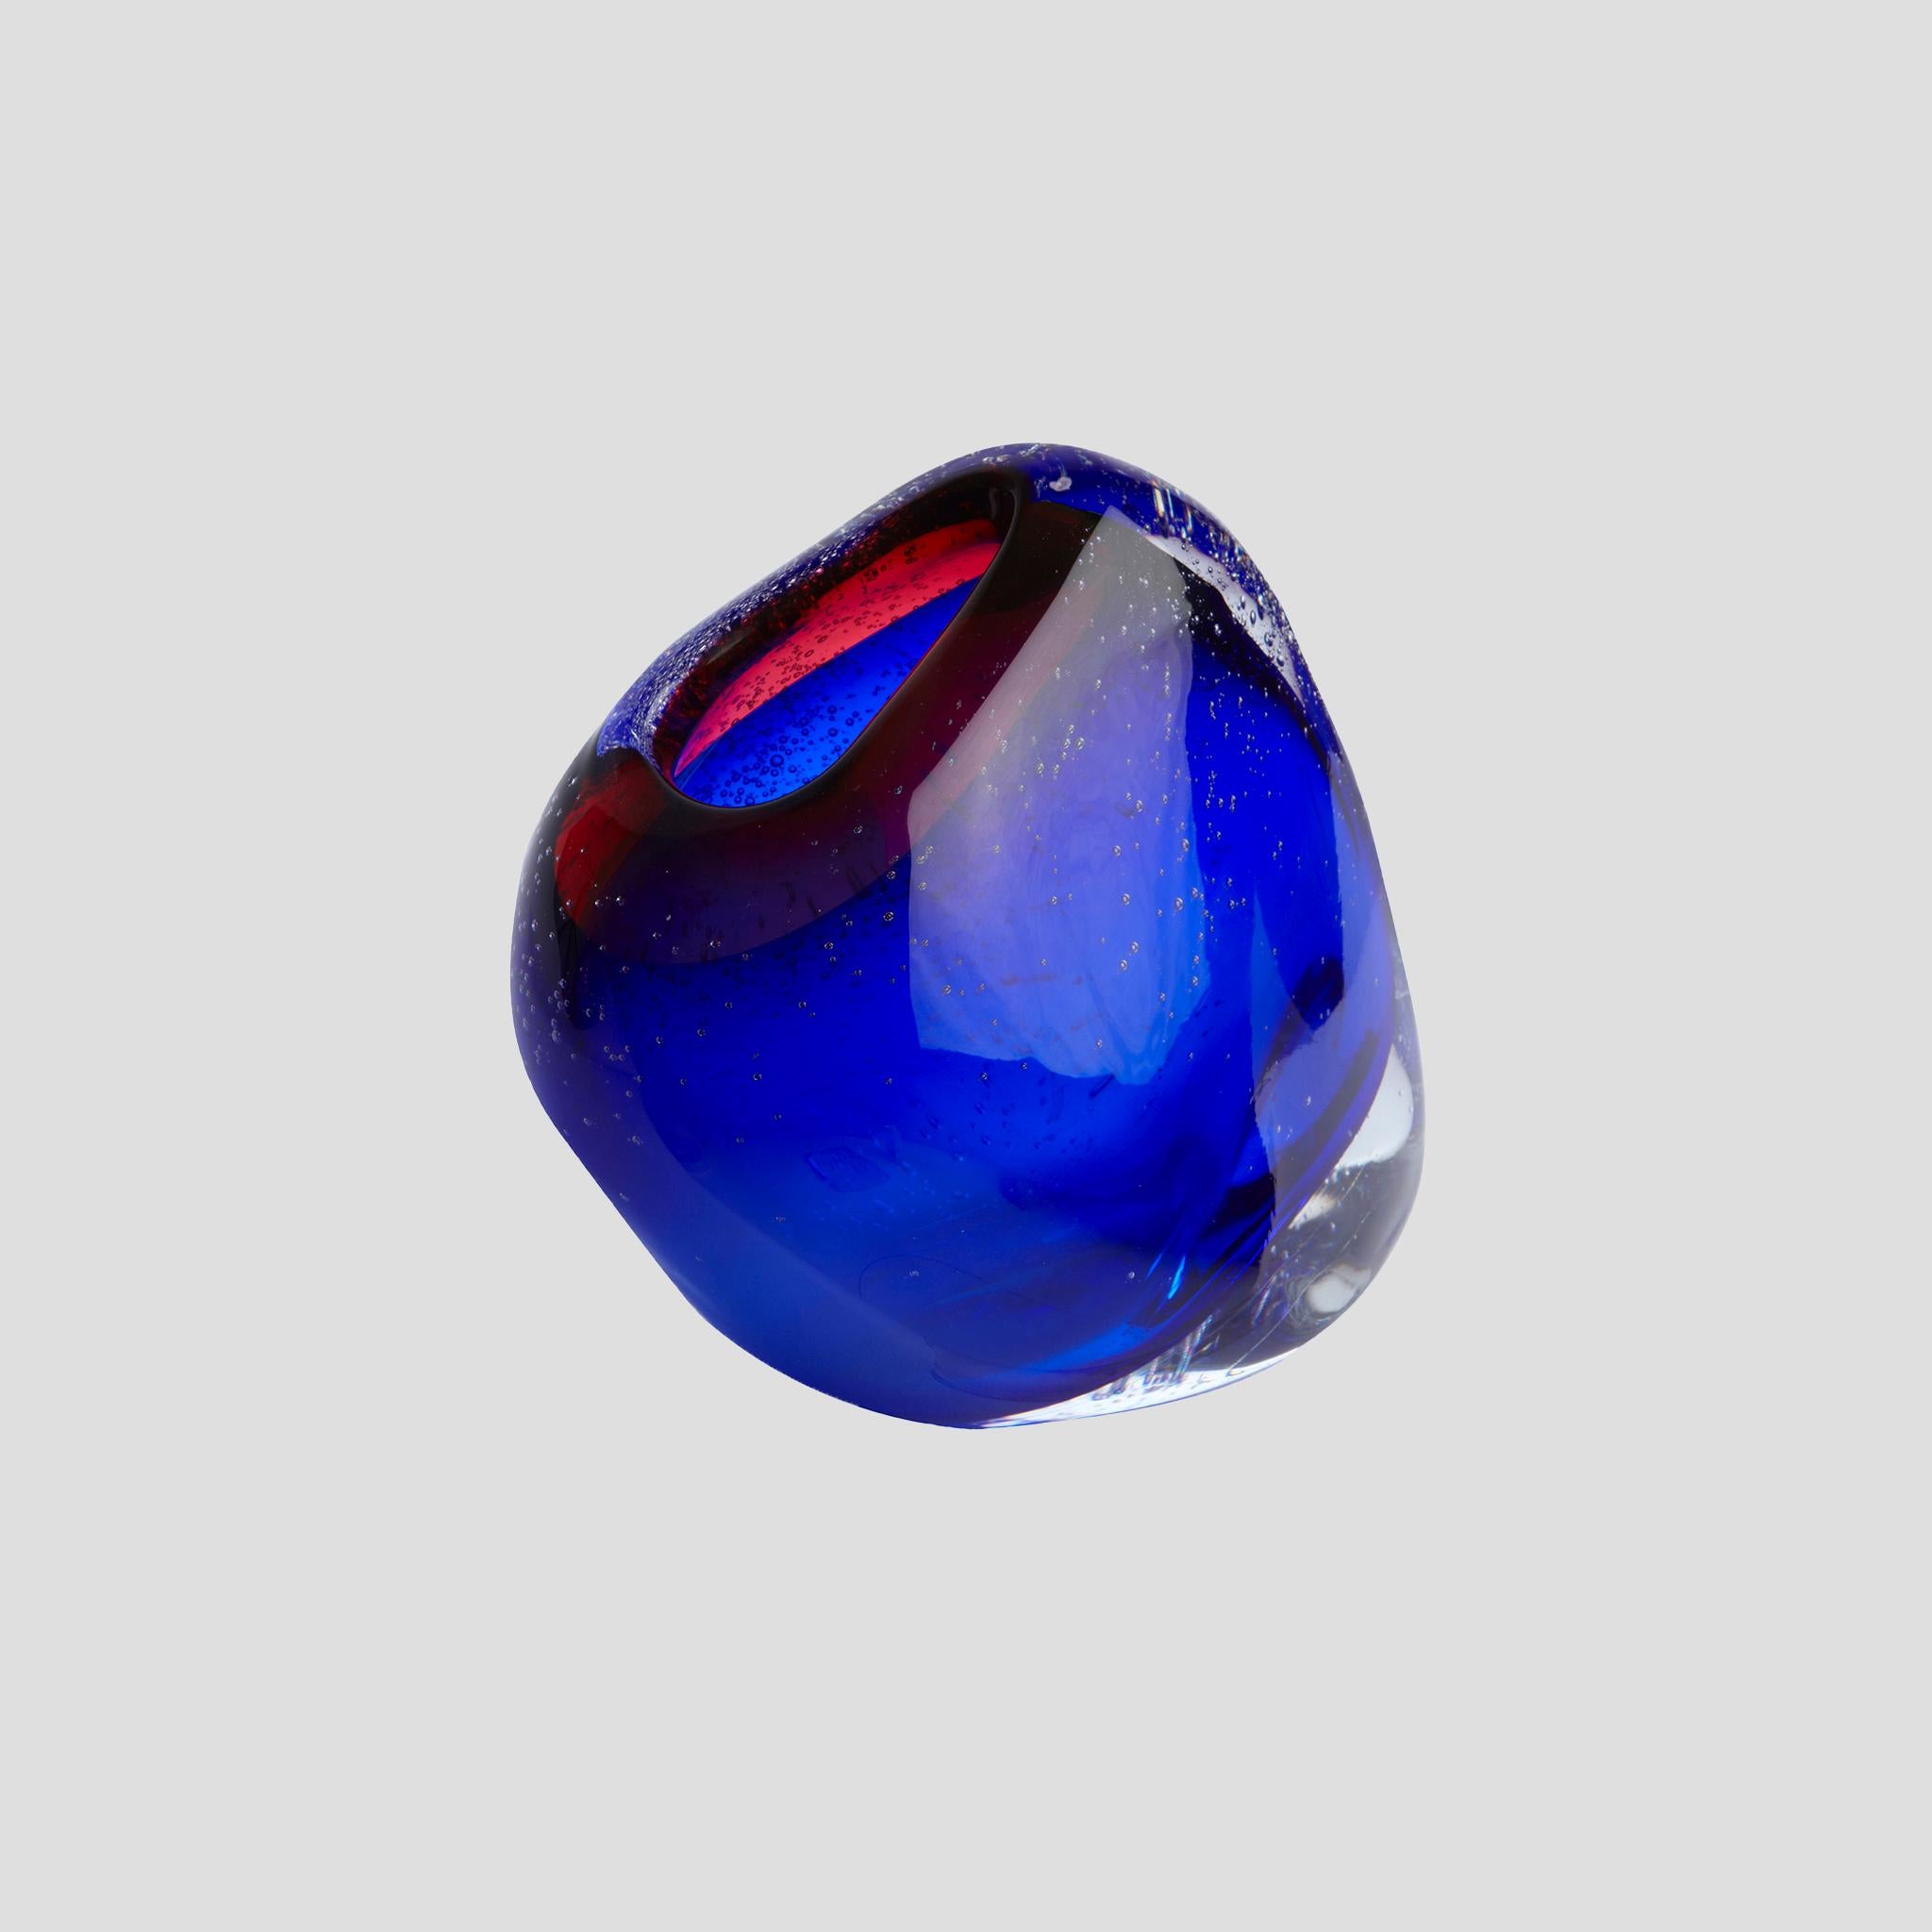 Product Details: Bubble Glass Vase - Blue / Main Body - Red / Rim 
Artist: Jasmim Glass Studio
Origin: Portugal
Length: 8